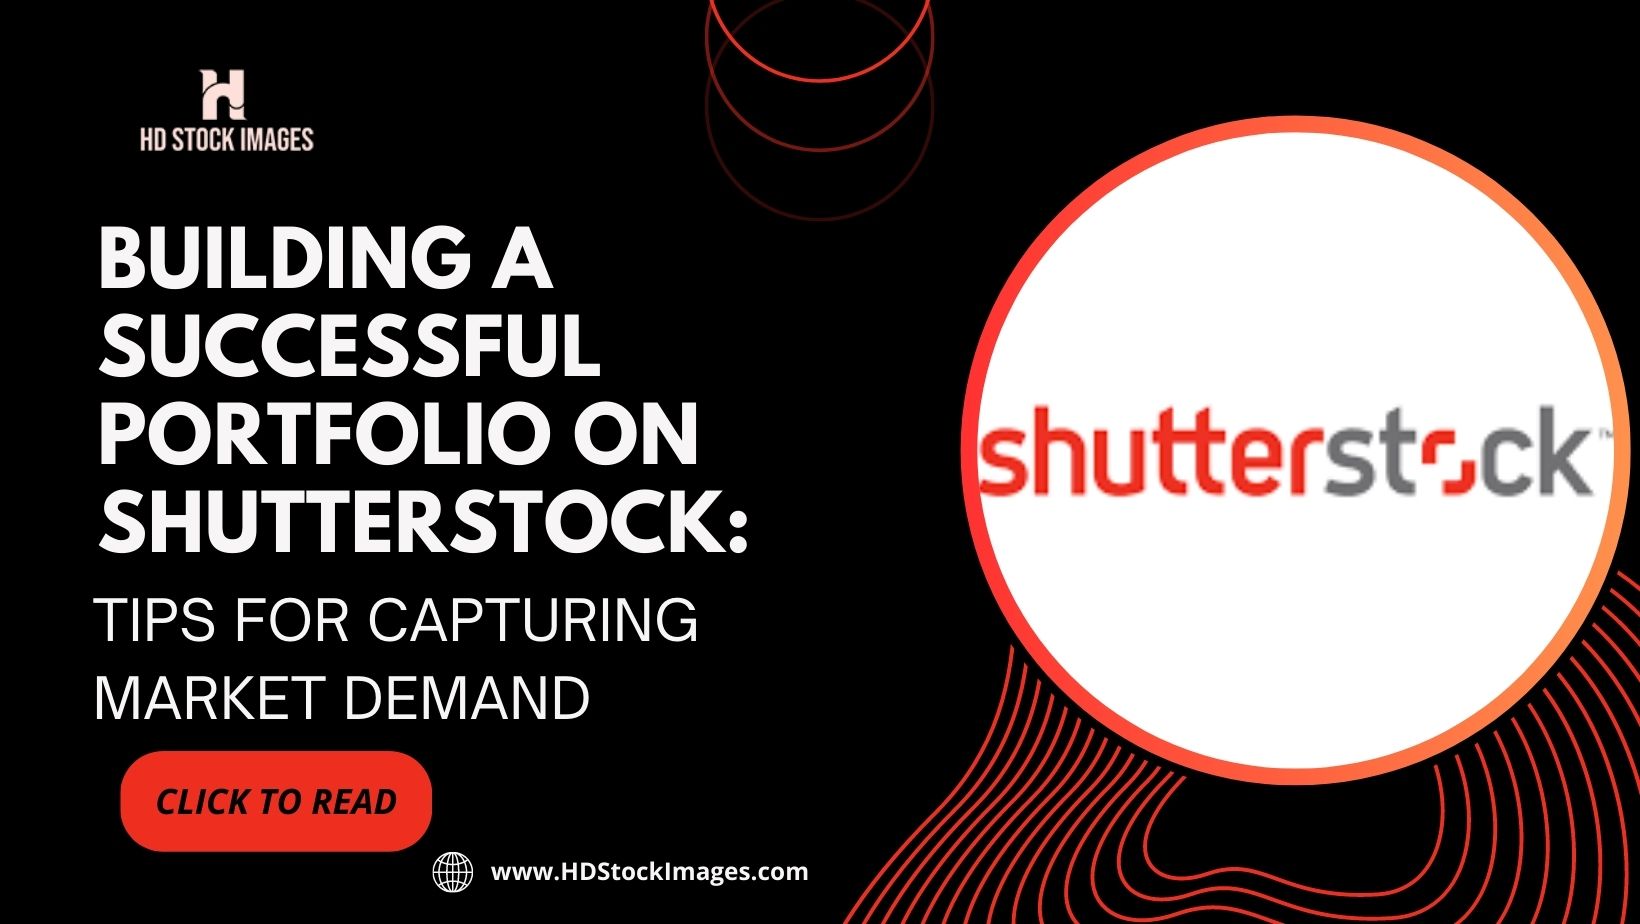 Building a Successful Portfolio on Shutterstock: Tips for Capturing Market Demand